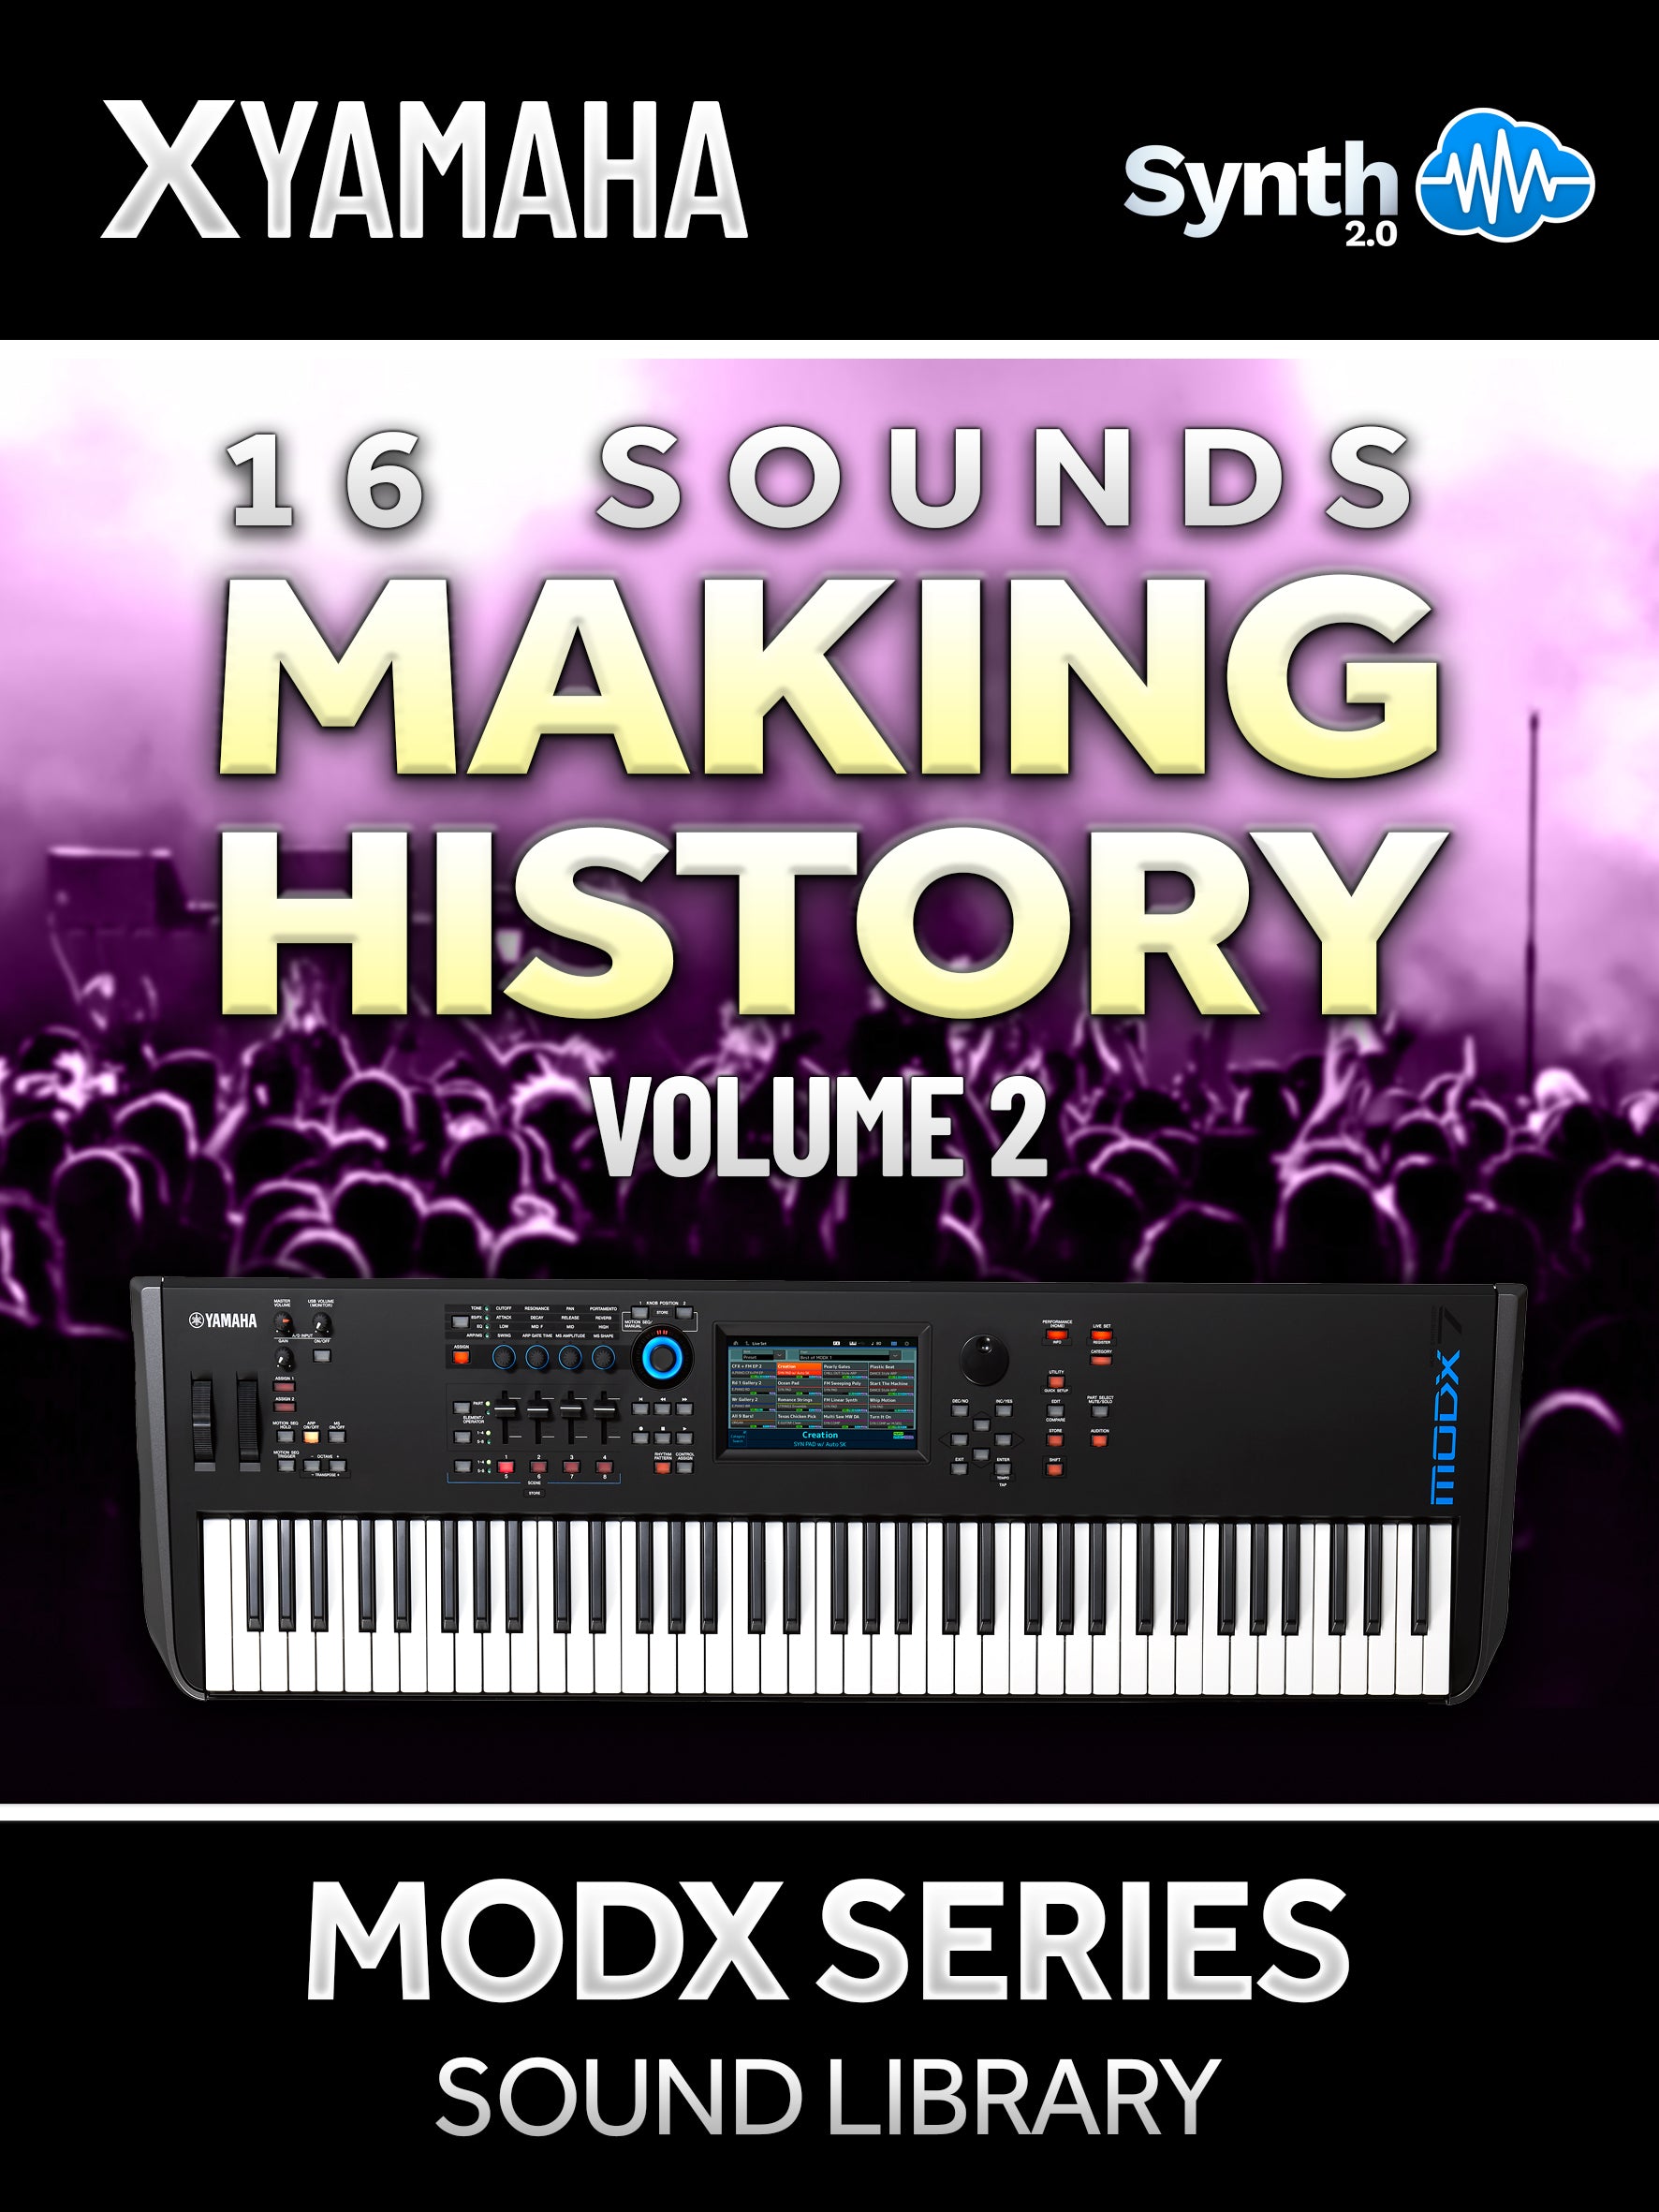 SCL449 - ( Bundle ) - 16 Sounds - Making History Vol.2 + Coverlogia Vol.2 - Yamaha MODX / MODX+